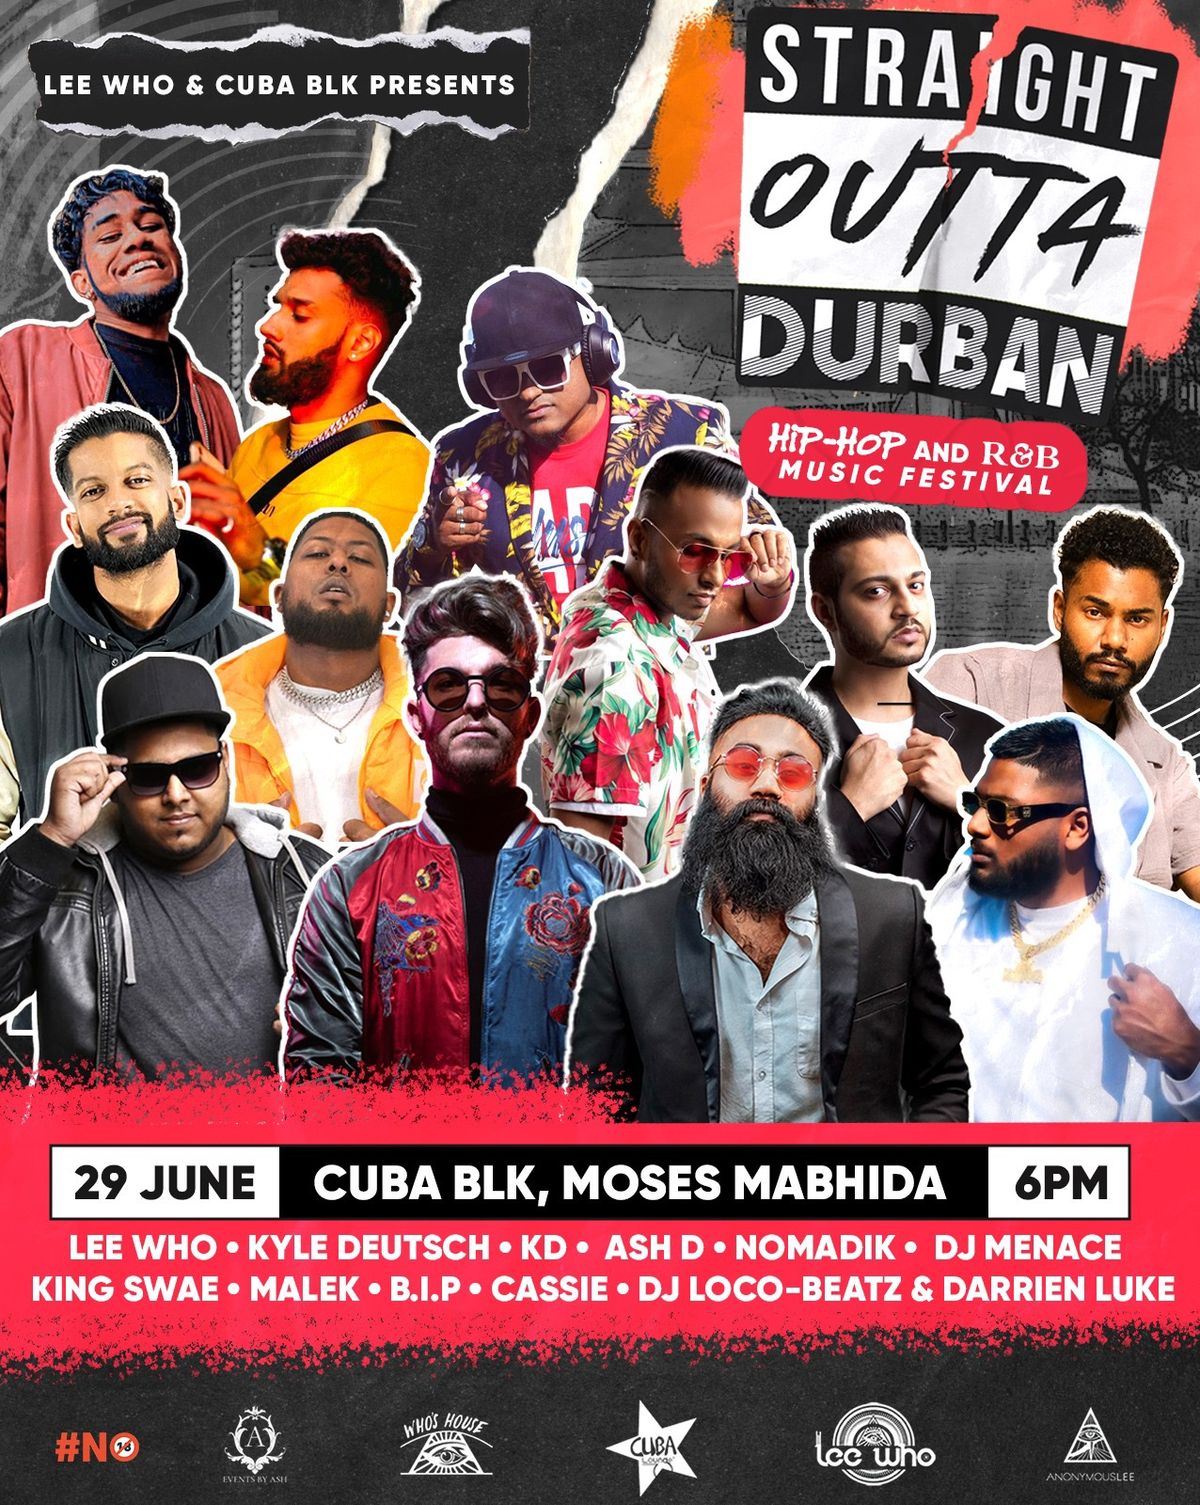 Straight outta Durban - Hip Hop and RnB Music Festival